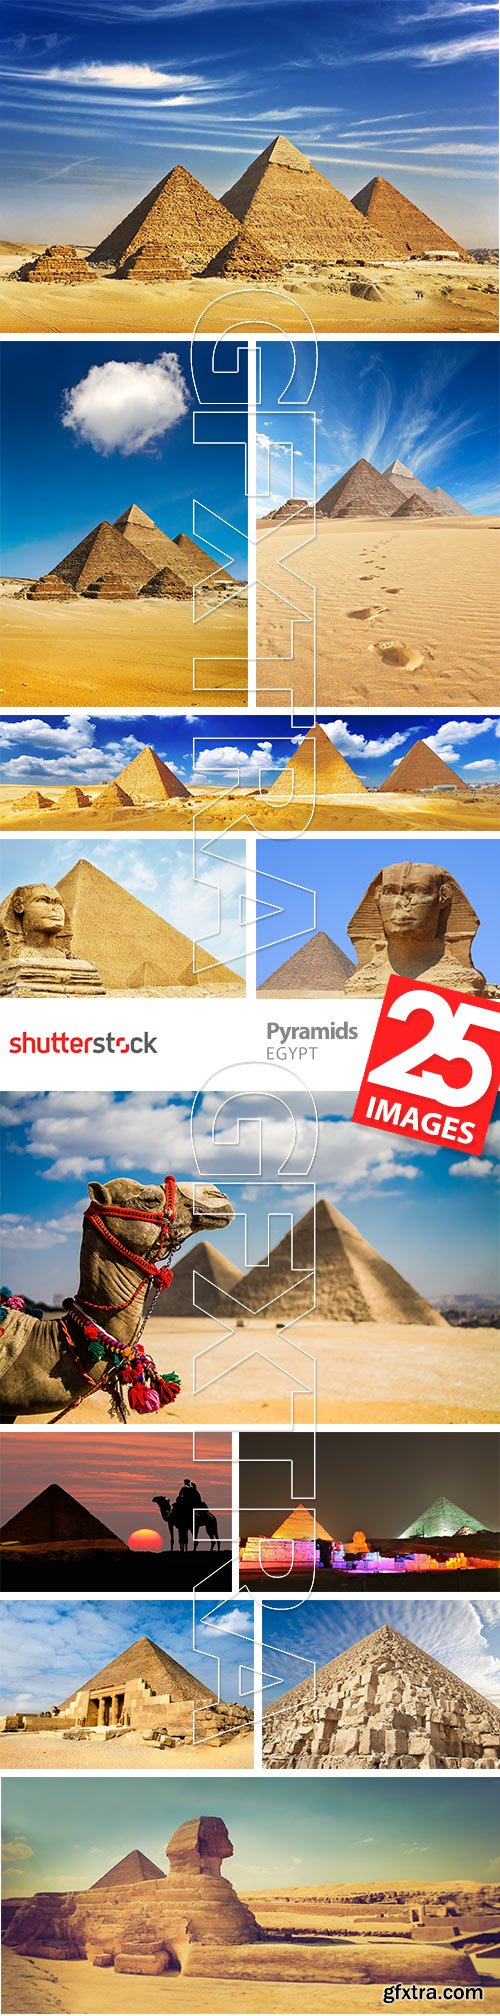 Pyramids EGYPT 25xJPG